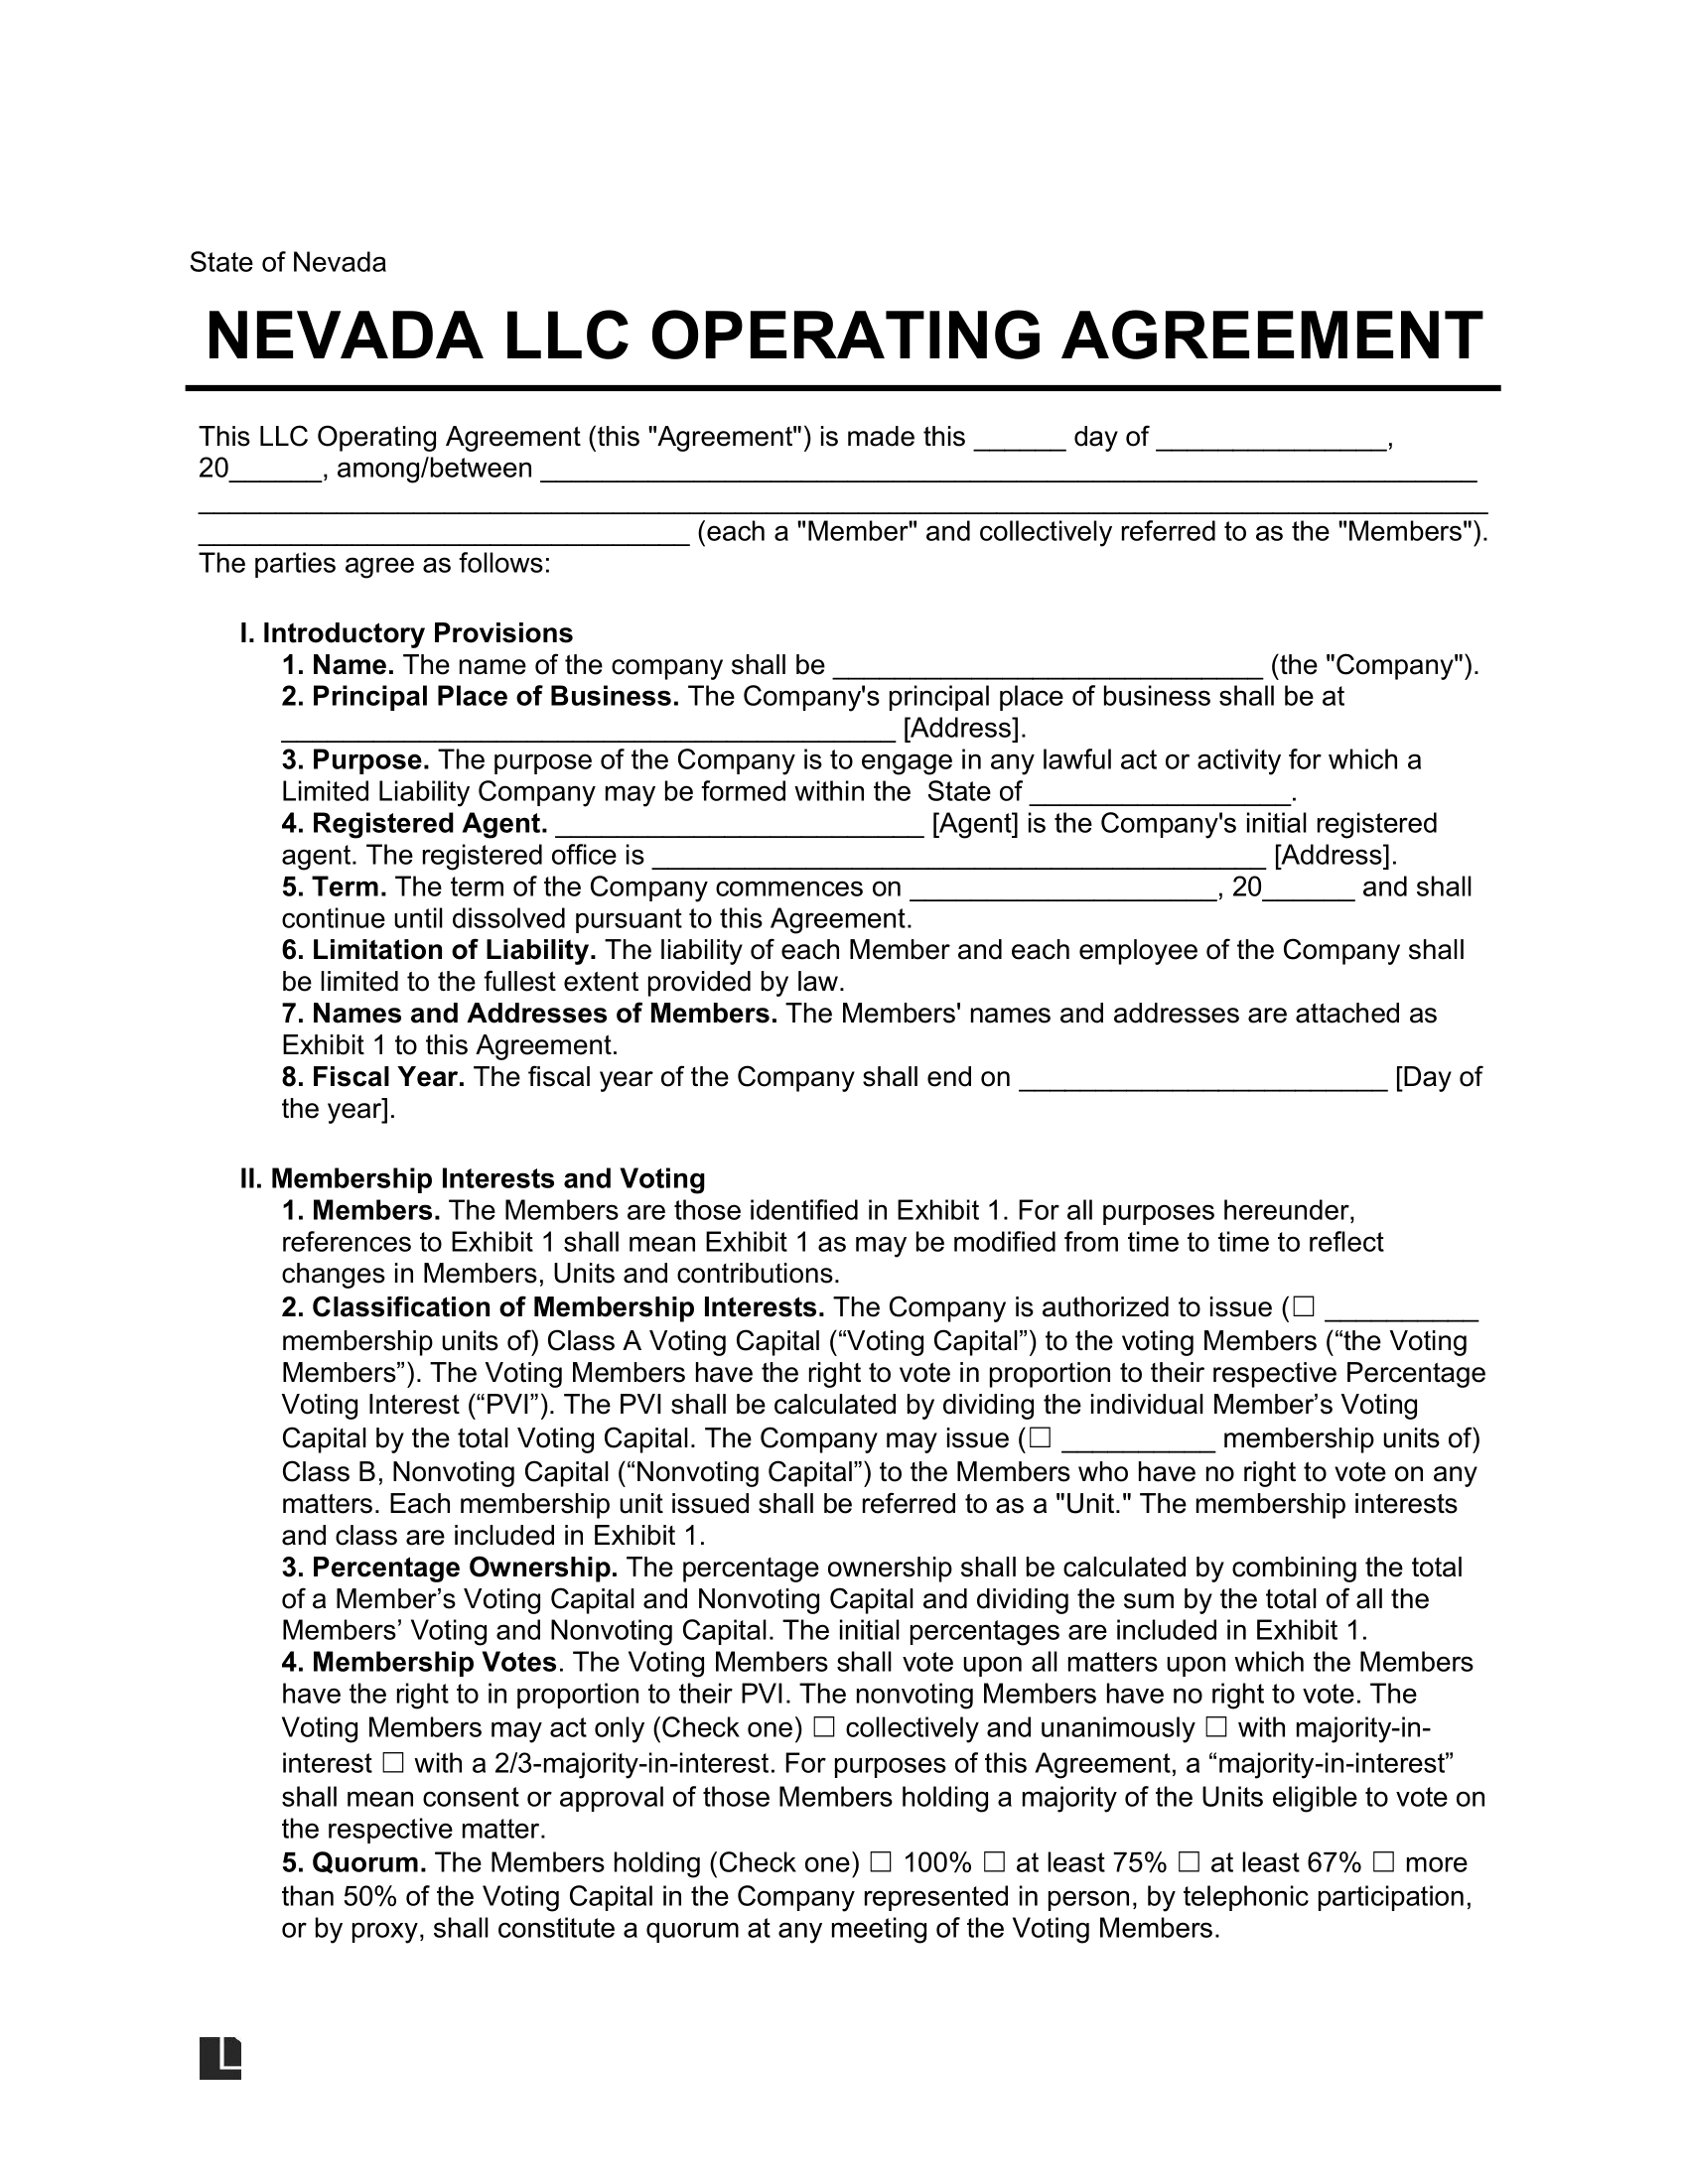 Nevada LLC Operating Agreement Template